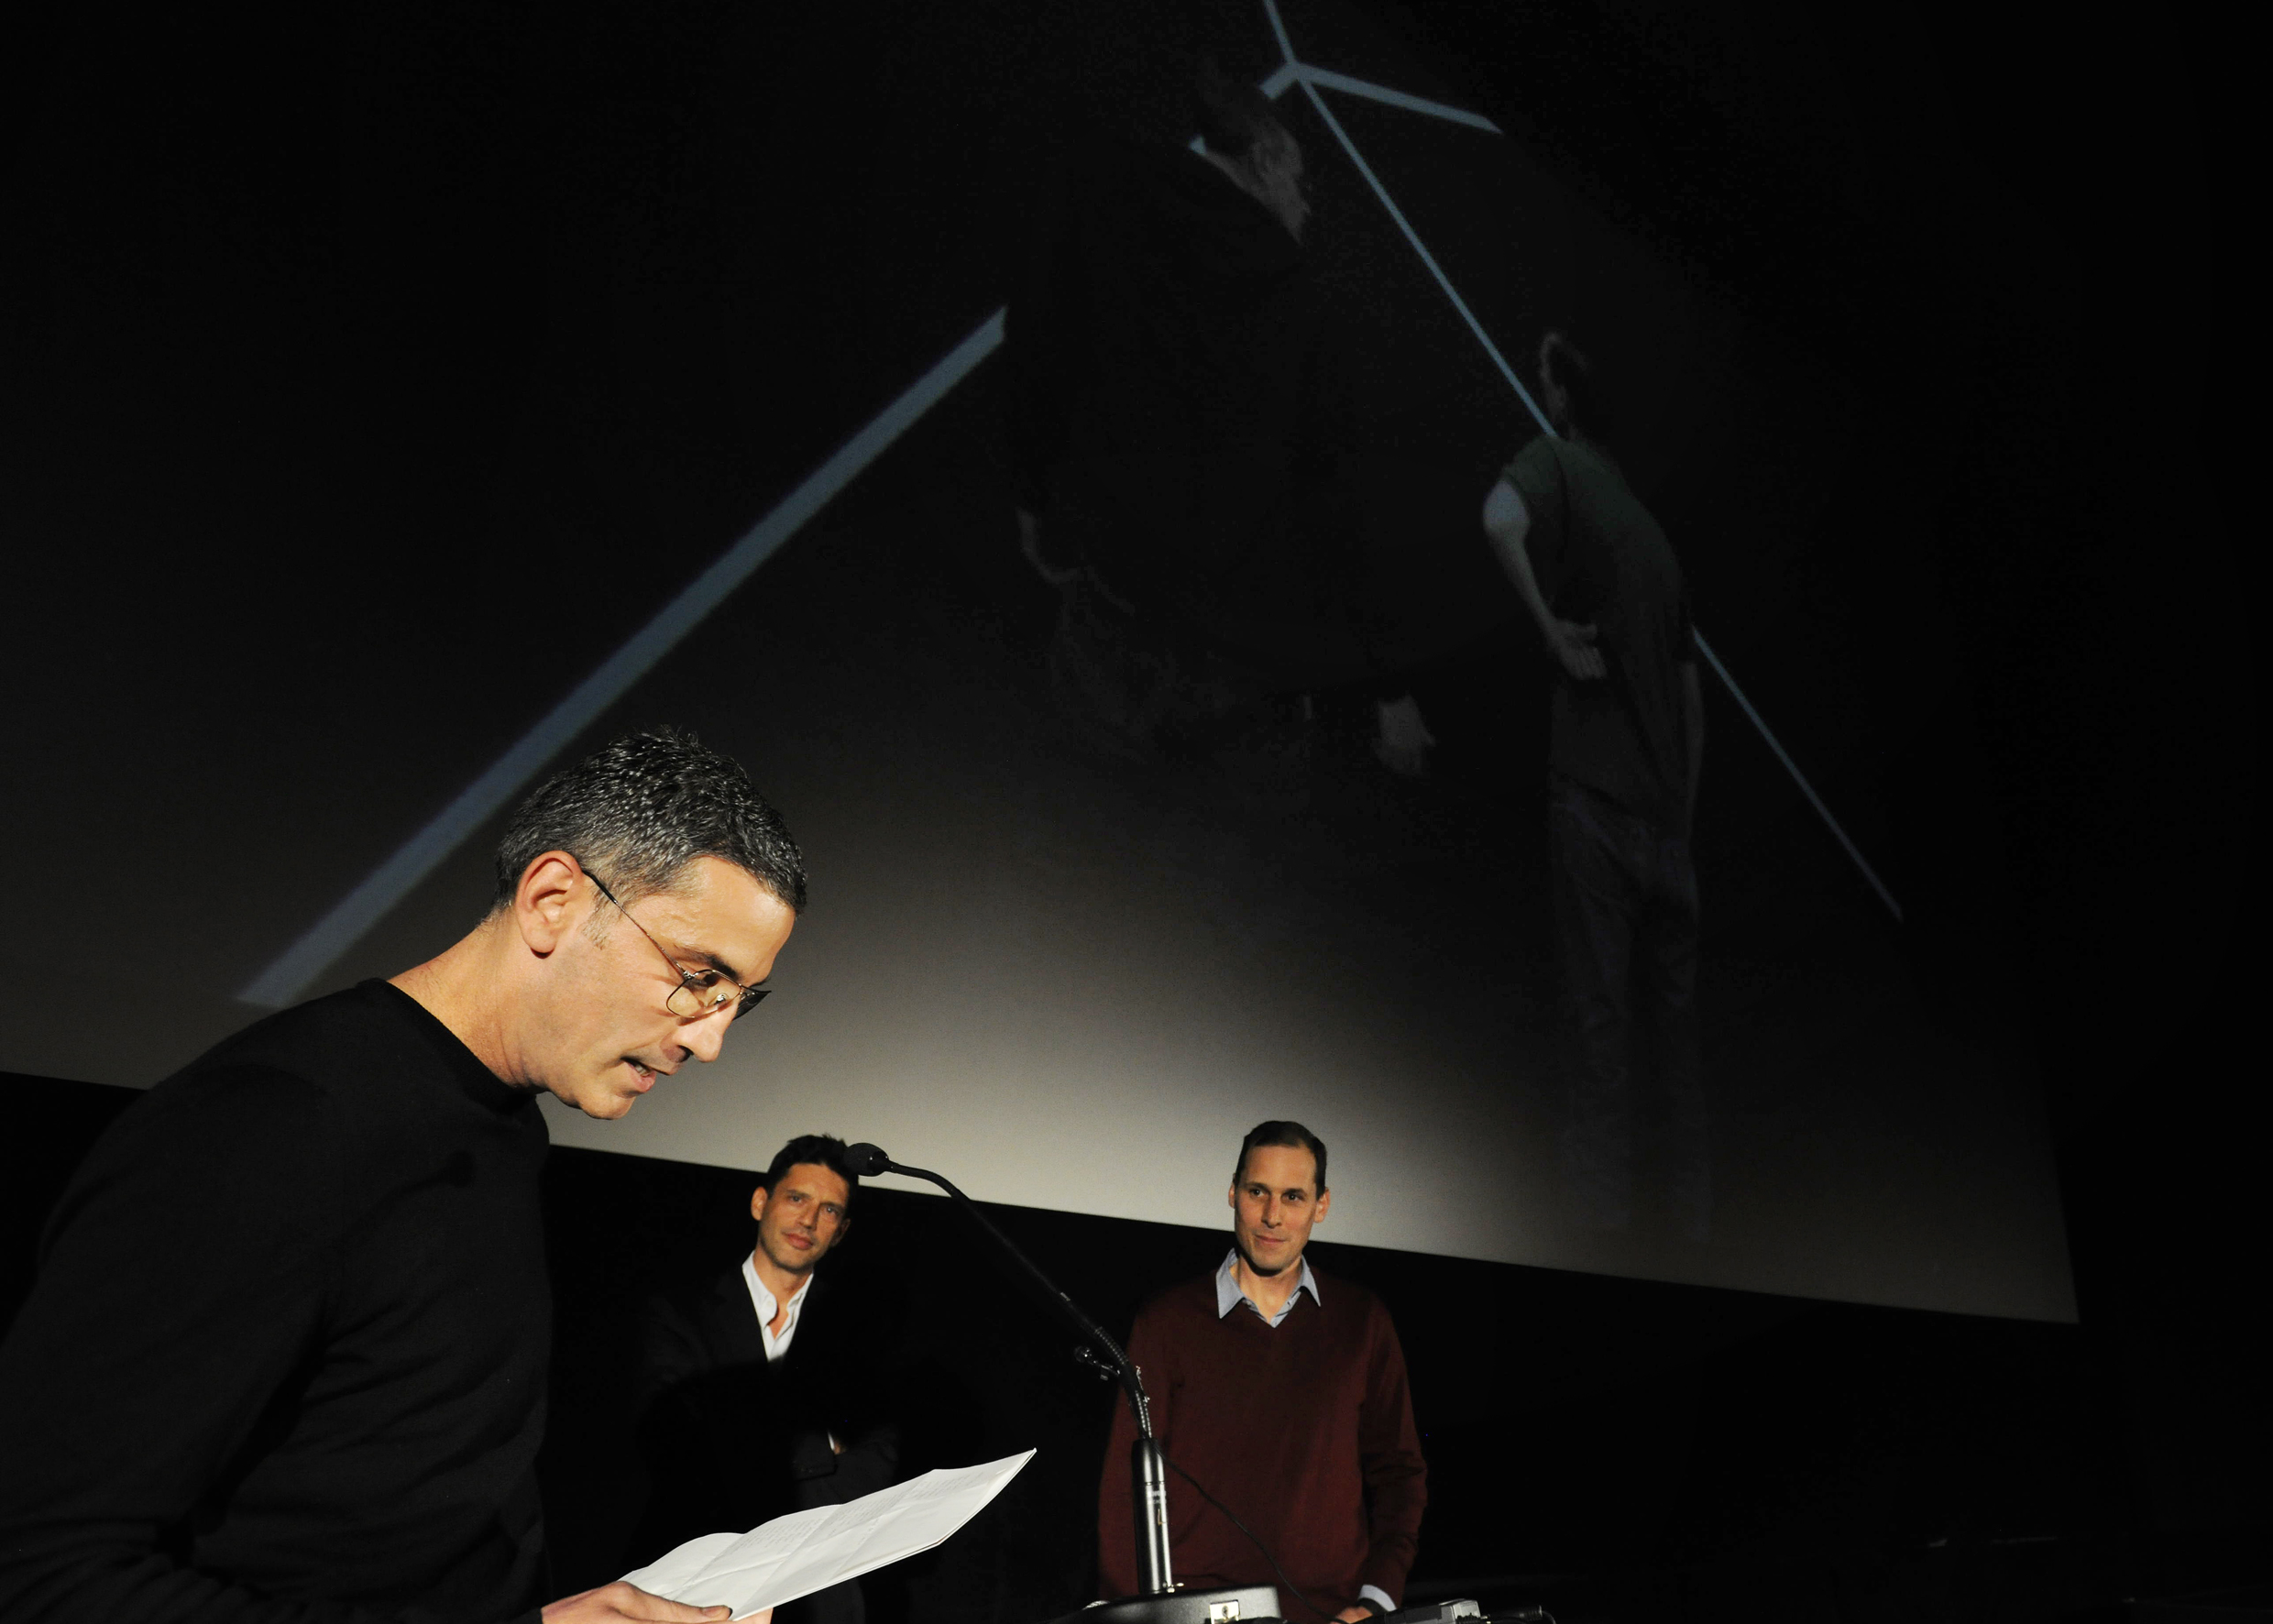 Preisverleihung im Cinéma Capitole Lausanne : NORM ‒ Dimitri Bruni und Manuel Krebs, Grand Prix Design 2011